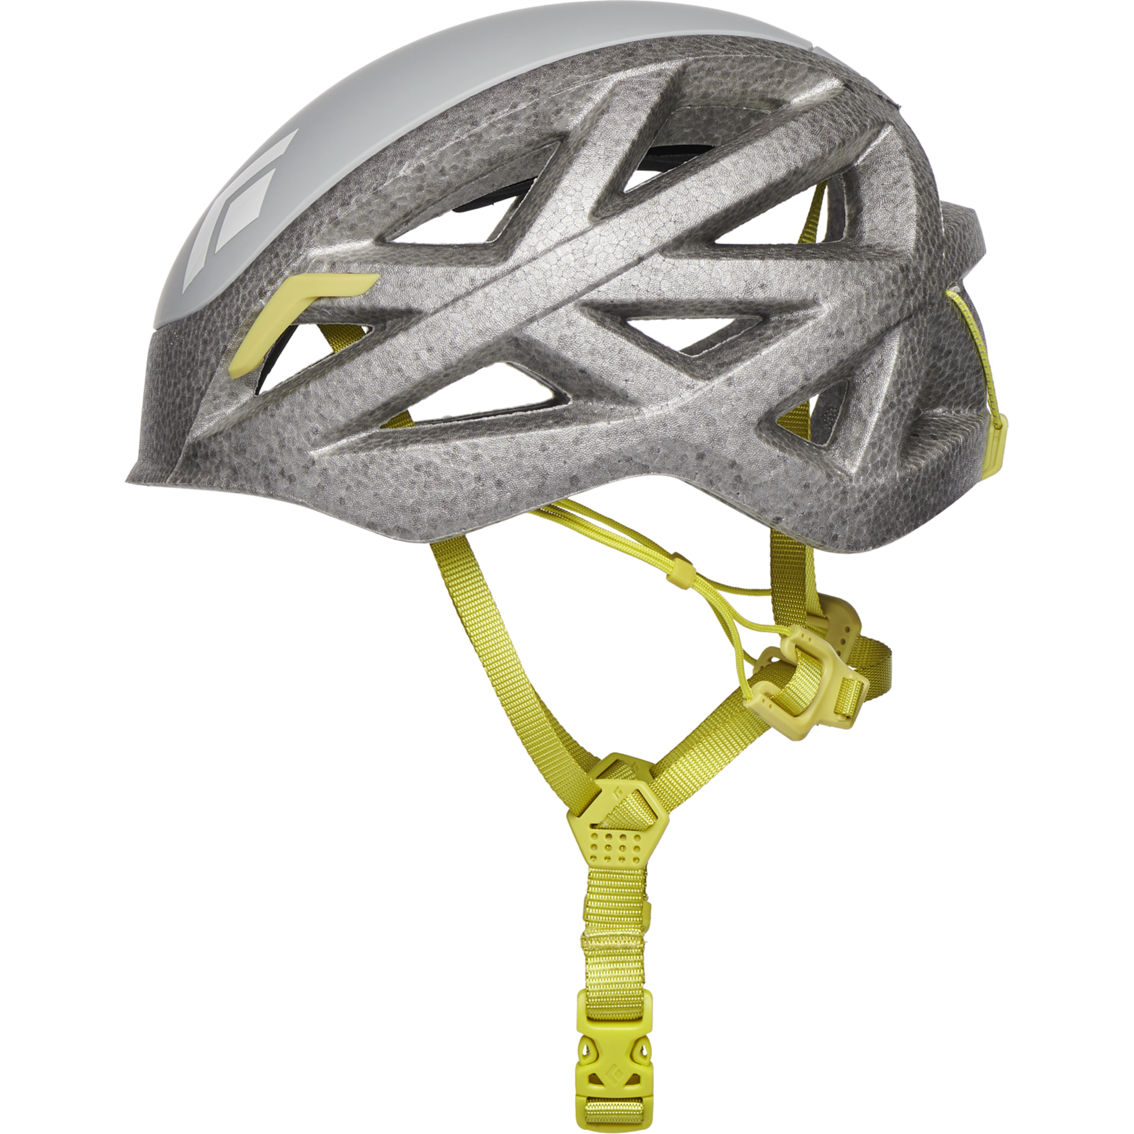 Black Diamond Equipment Vapor Helmet - Image 3 of 7